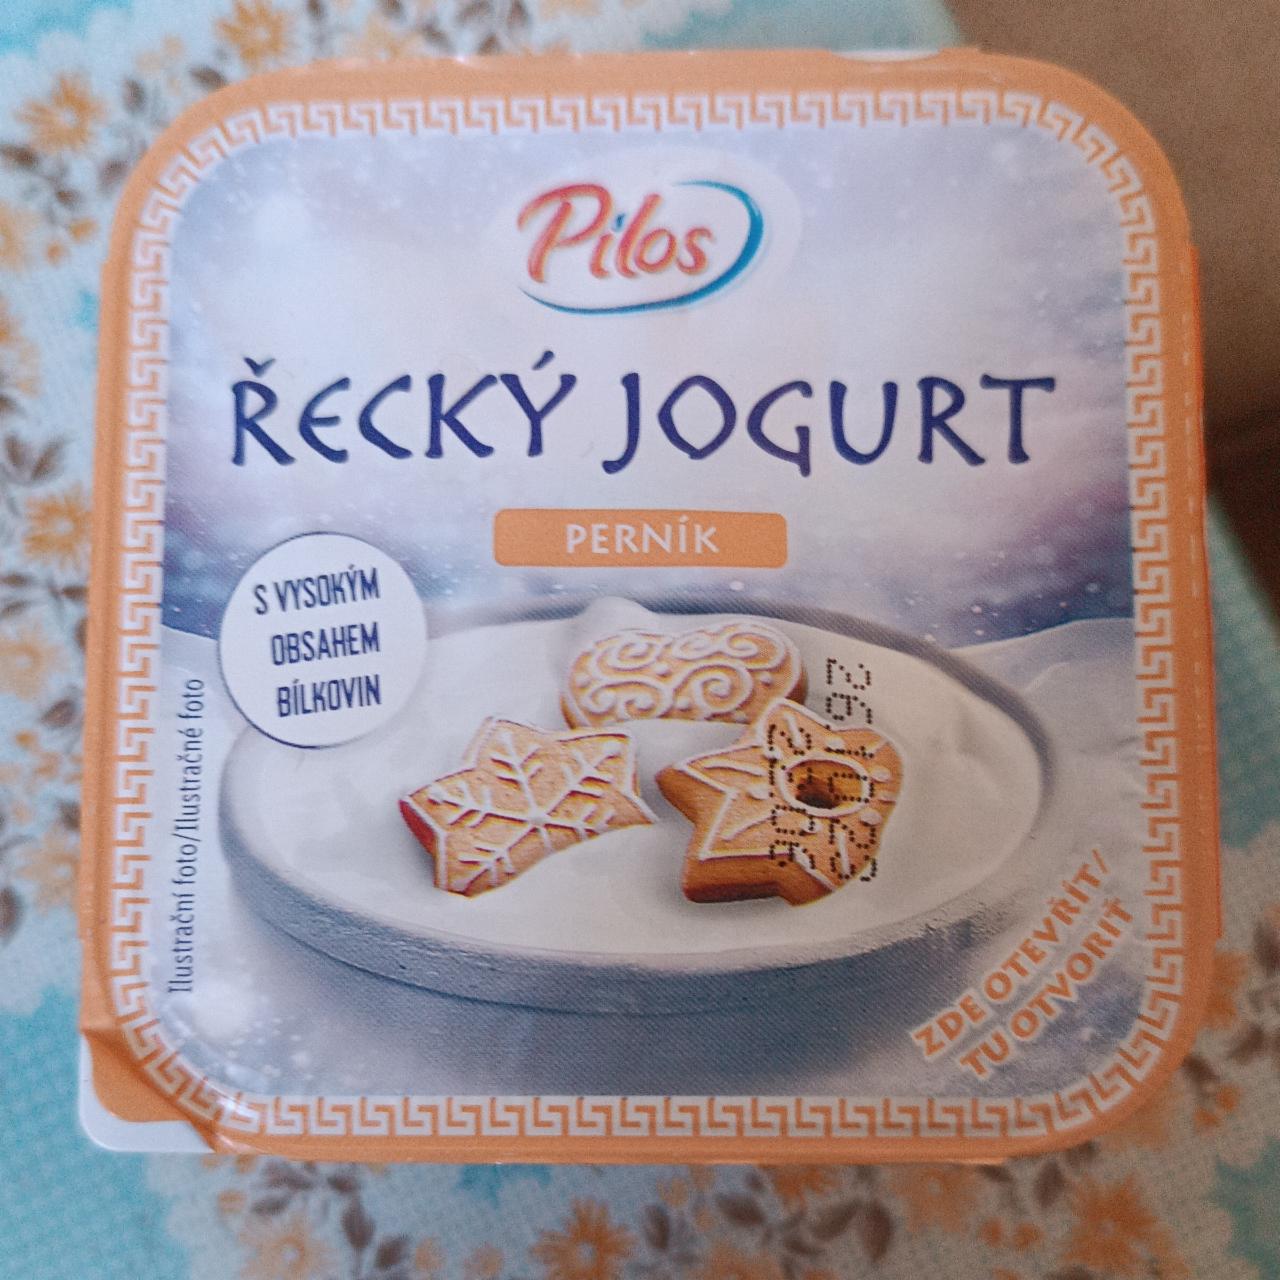 Fotografie - Řecký jogurt perník Pilos